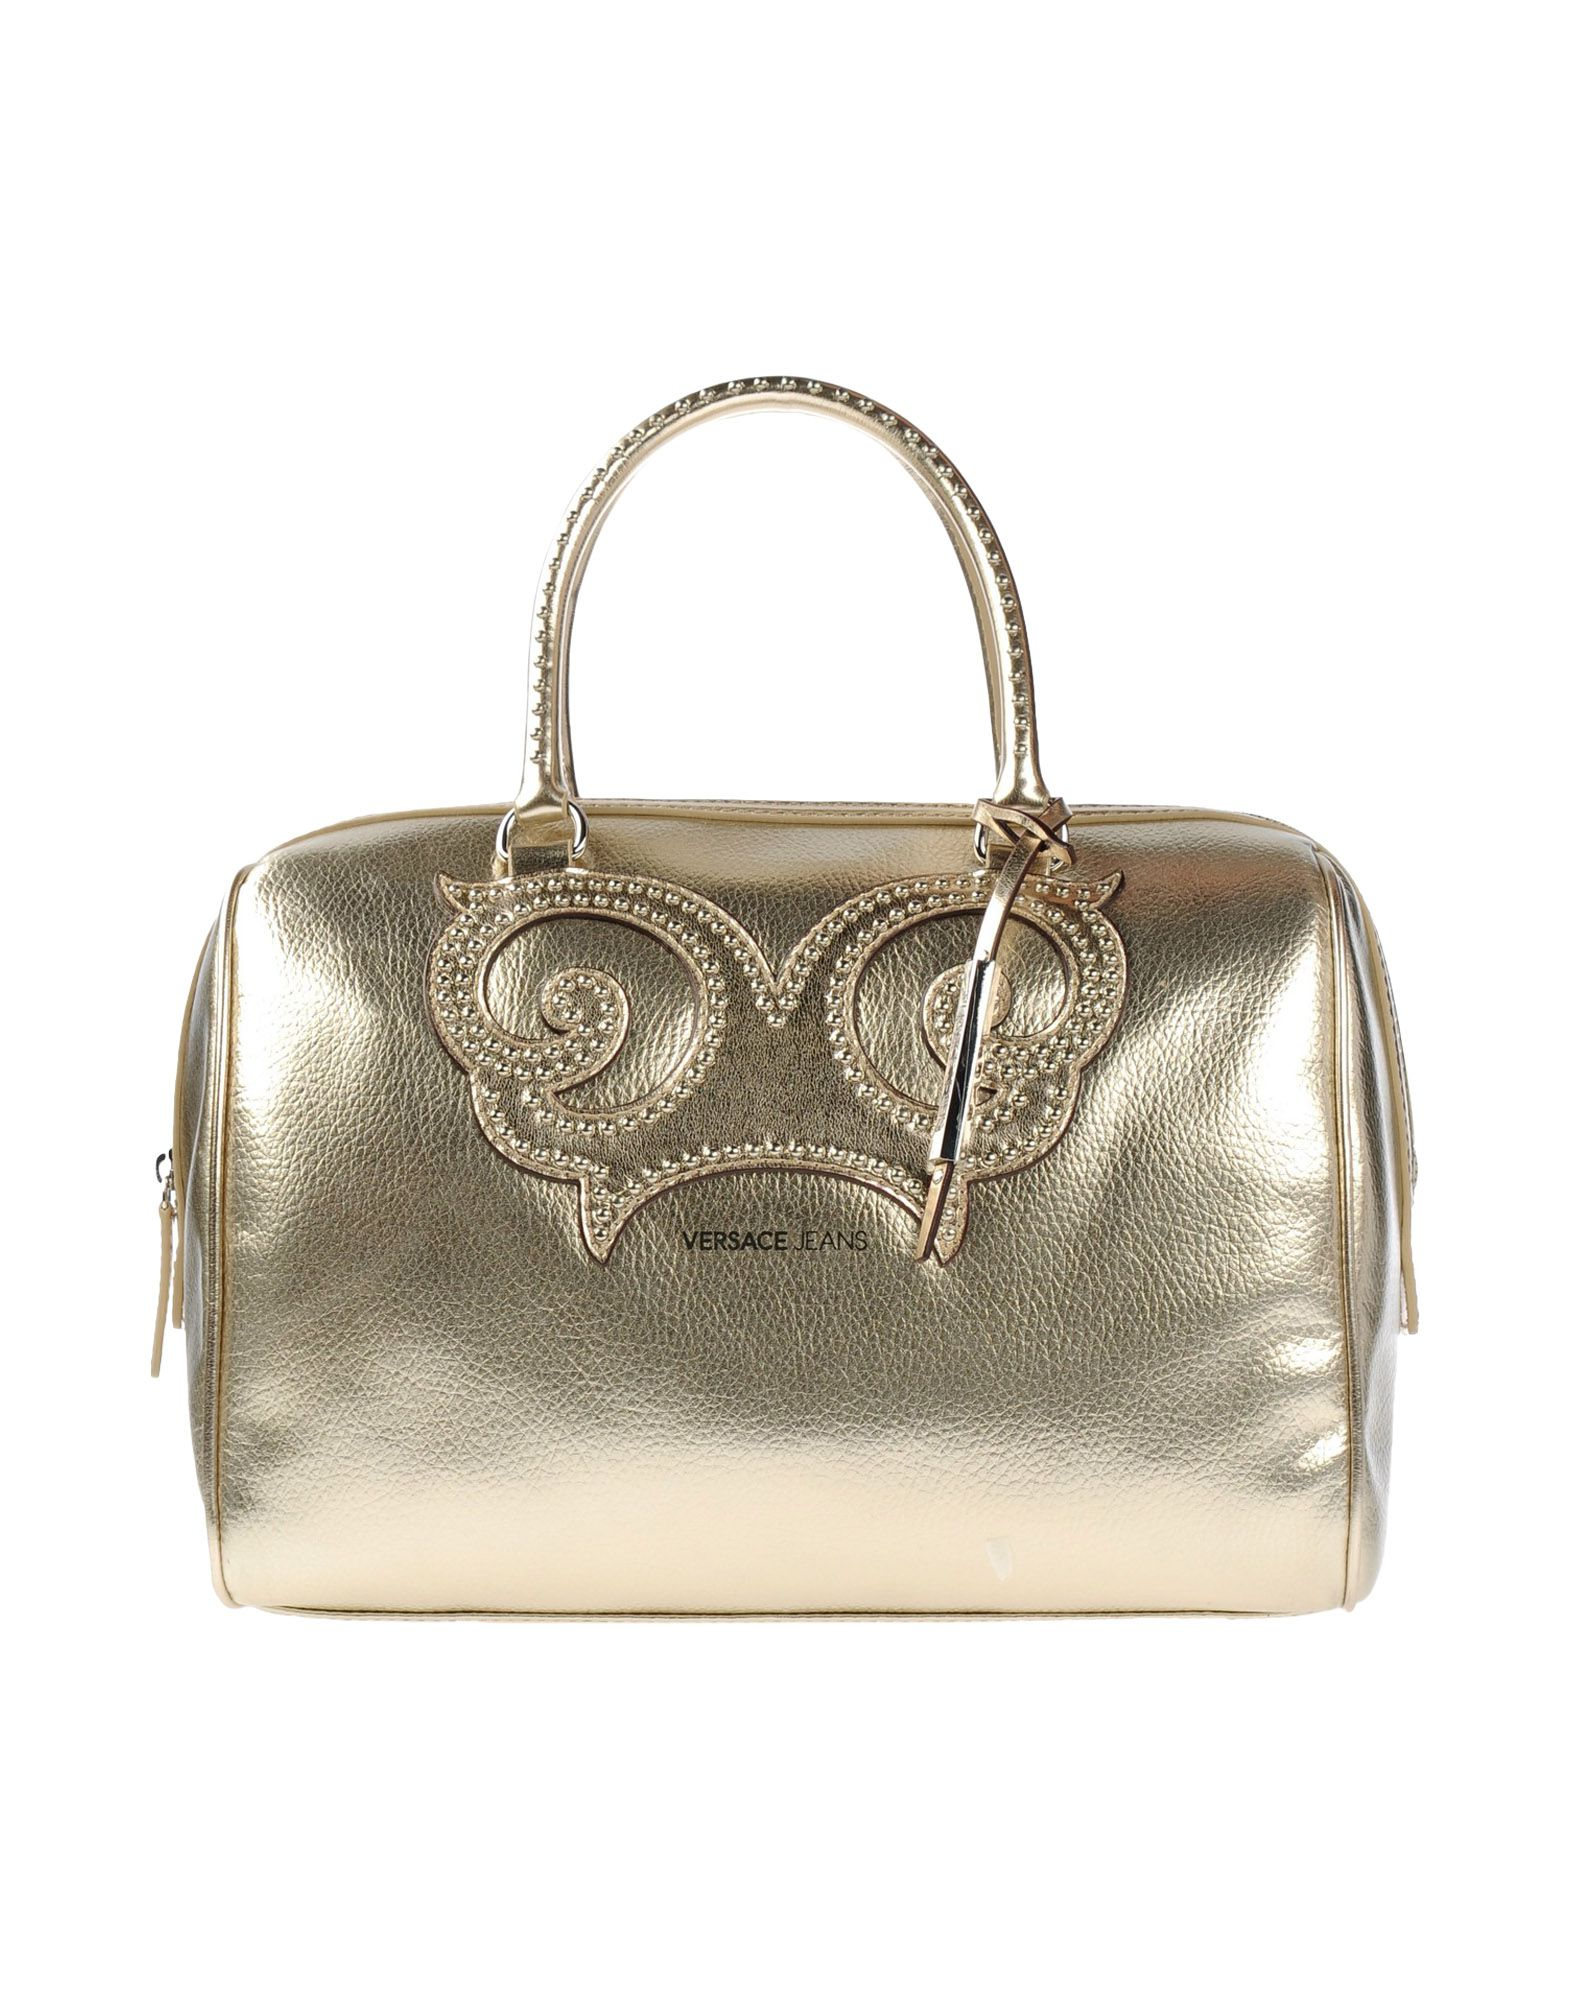 Versace jeans Handbag in Gold | Lyst